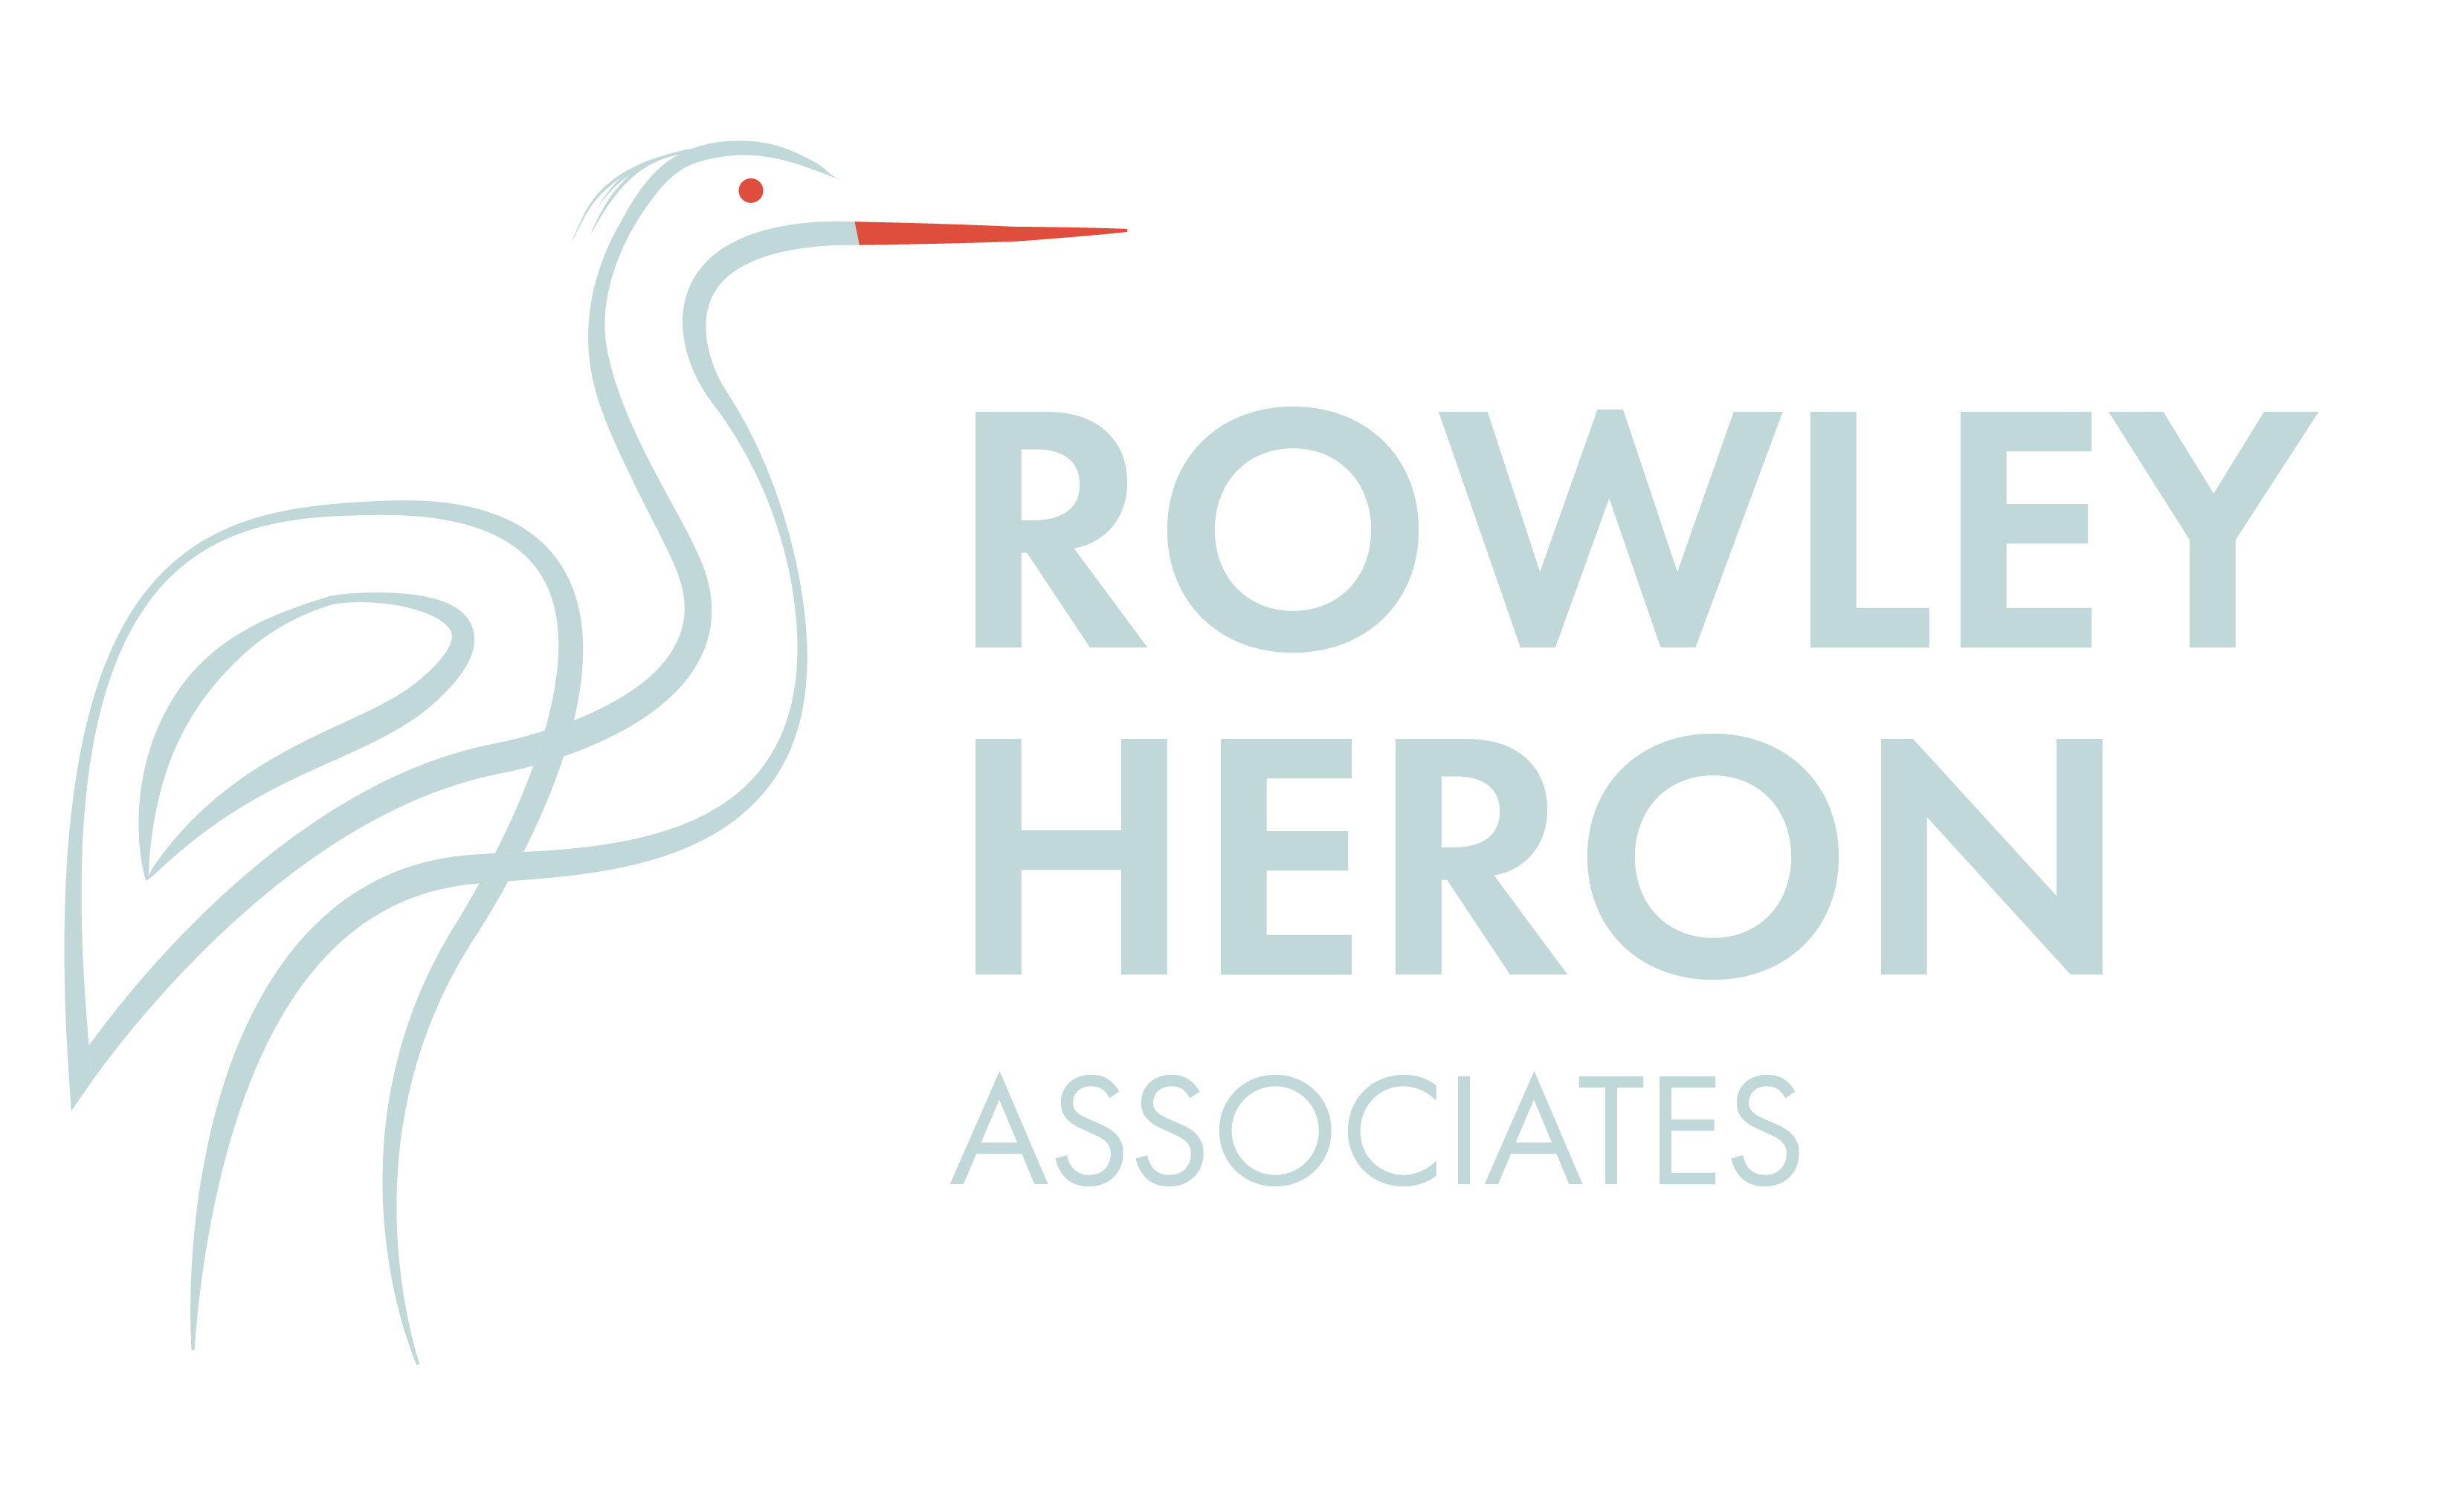 rowley-heron-associates-logo-2-png